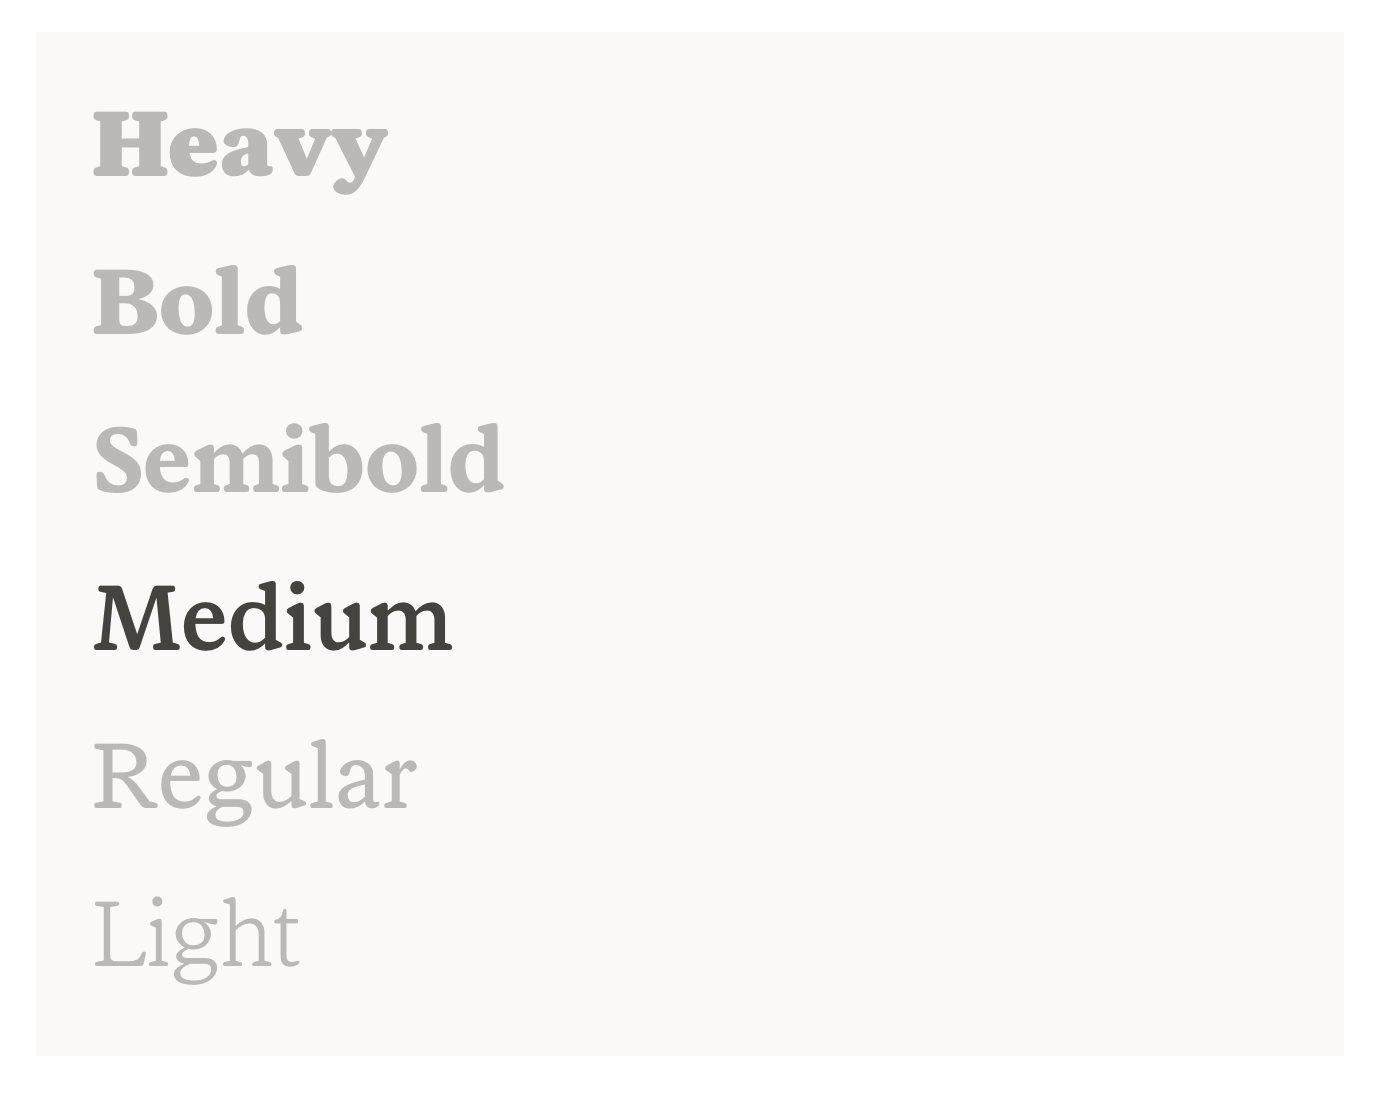 Various Stuart font weights, highlighting Medium.